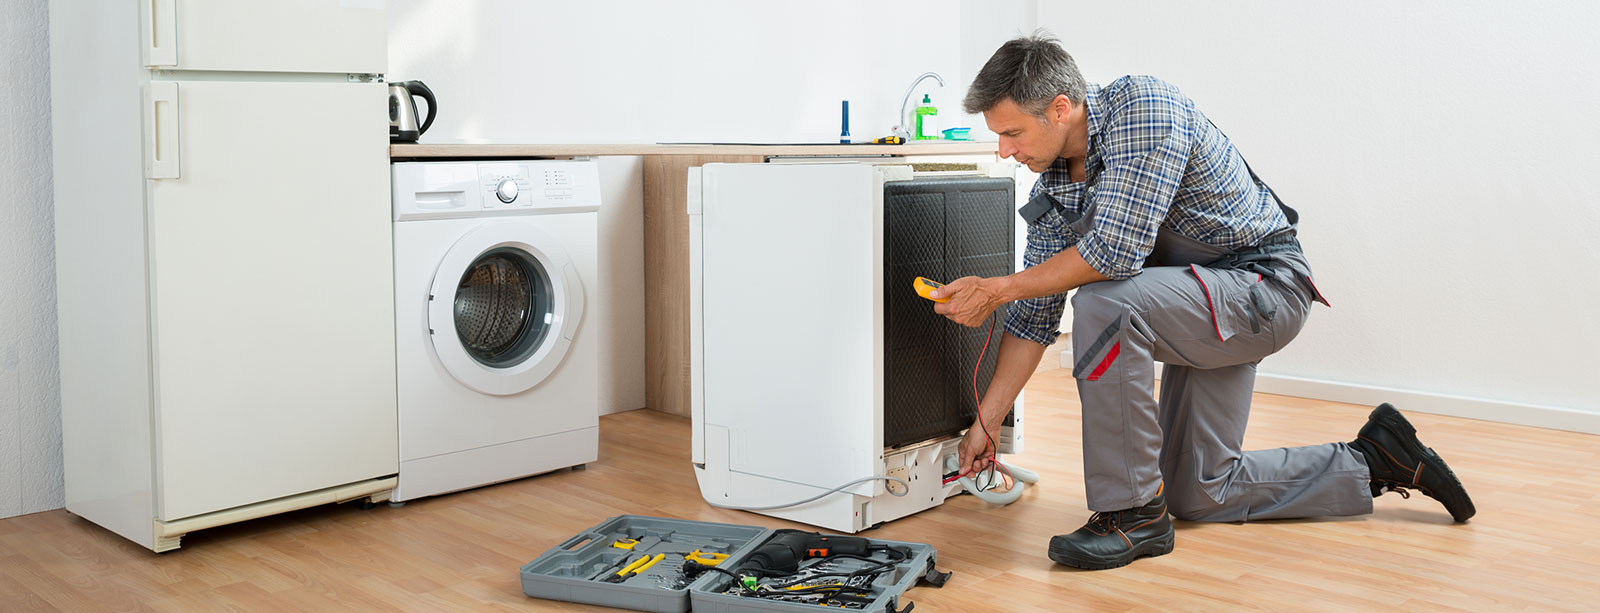 Dependable Refrigeration & Appliance Repair Service Refrigerator Repair Tucson